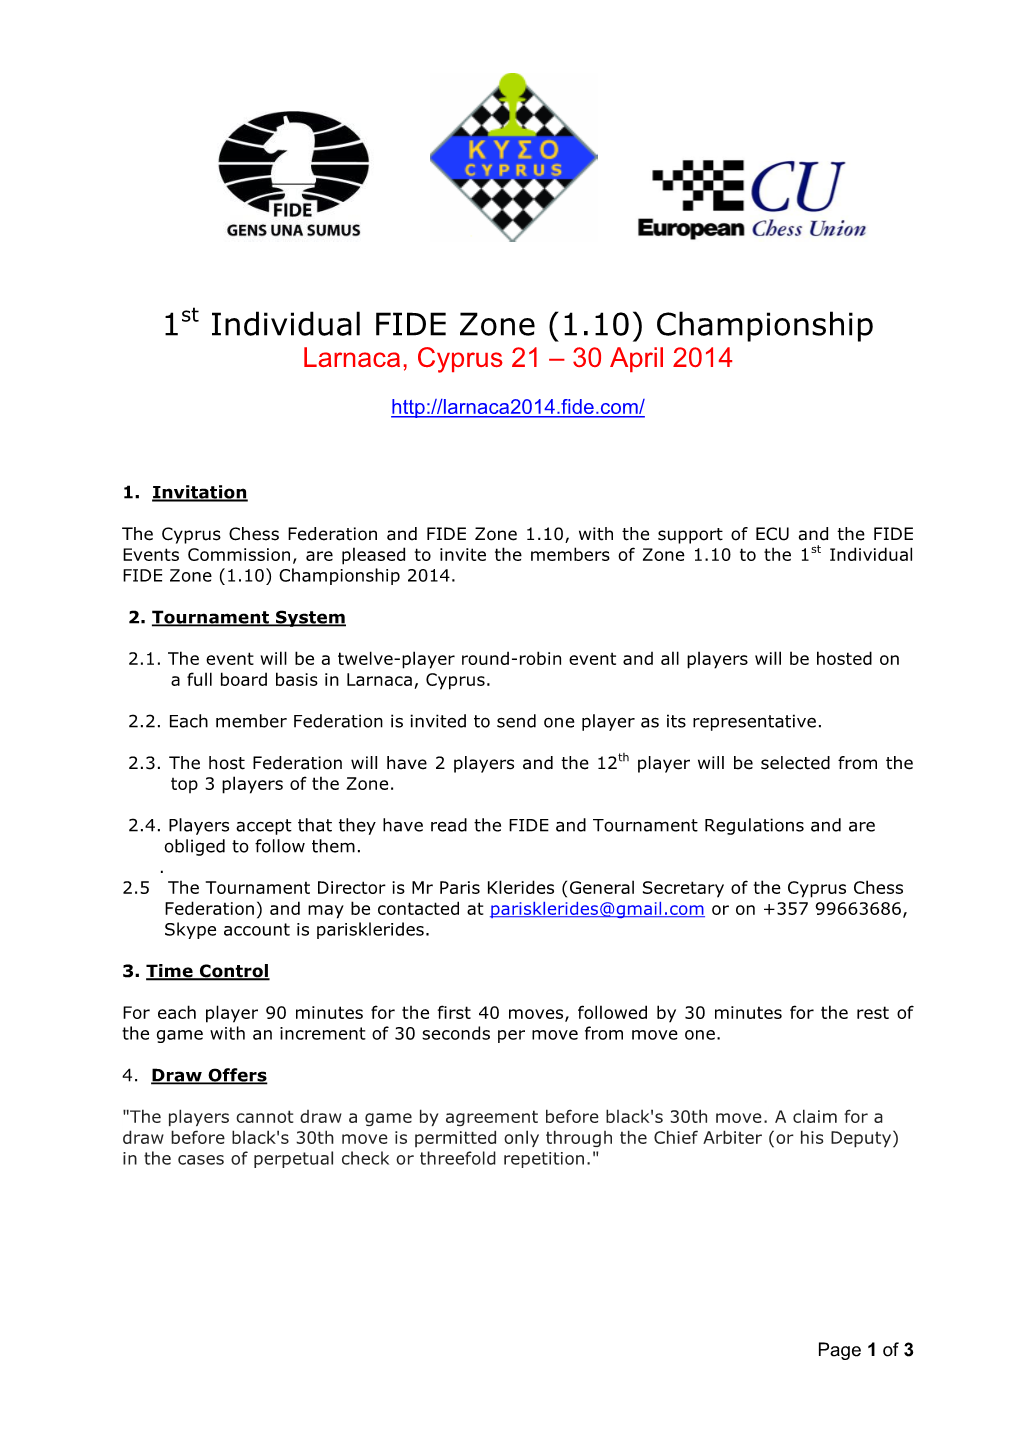 1St Individual FIDE Zone (1.10) Championship Larnaca, Cyprus 21 – 30 April 2014